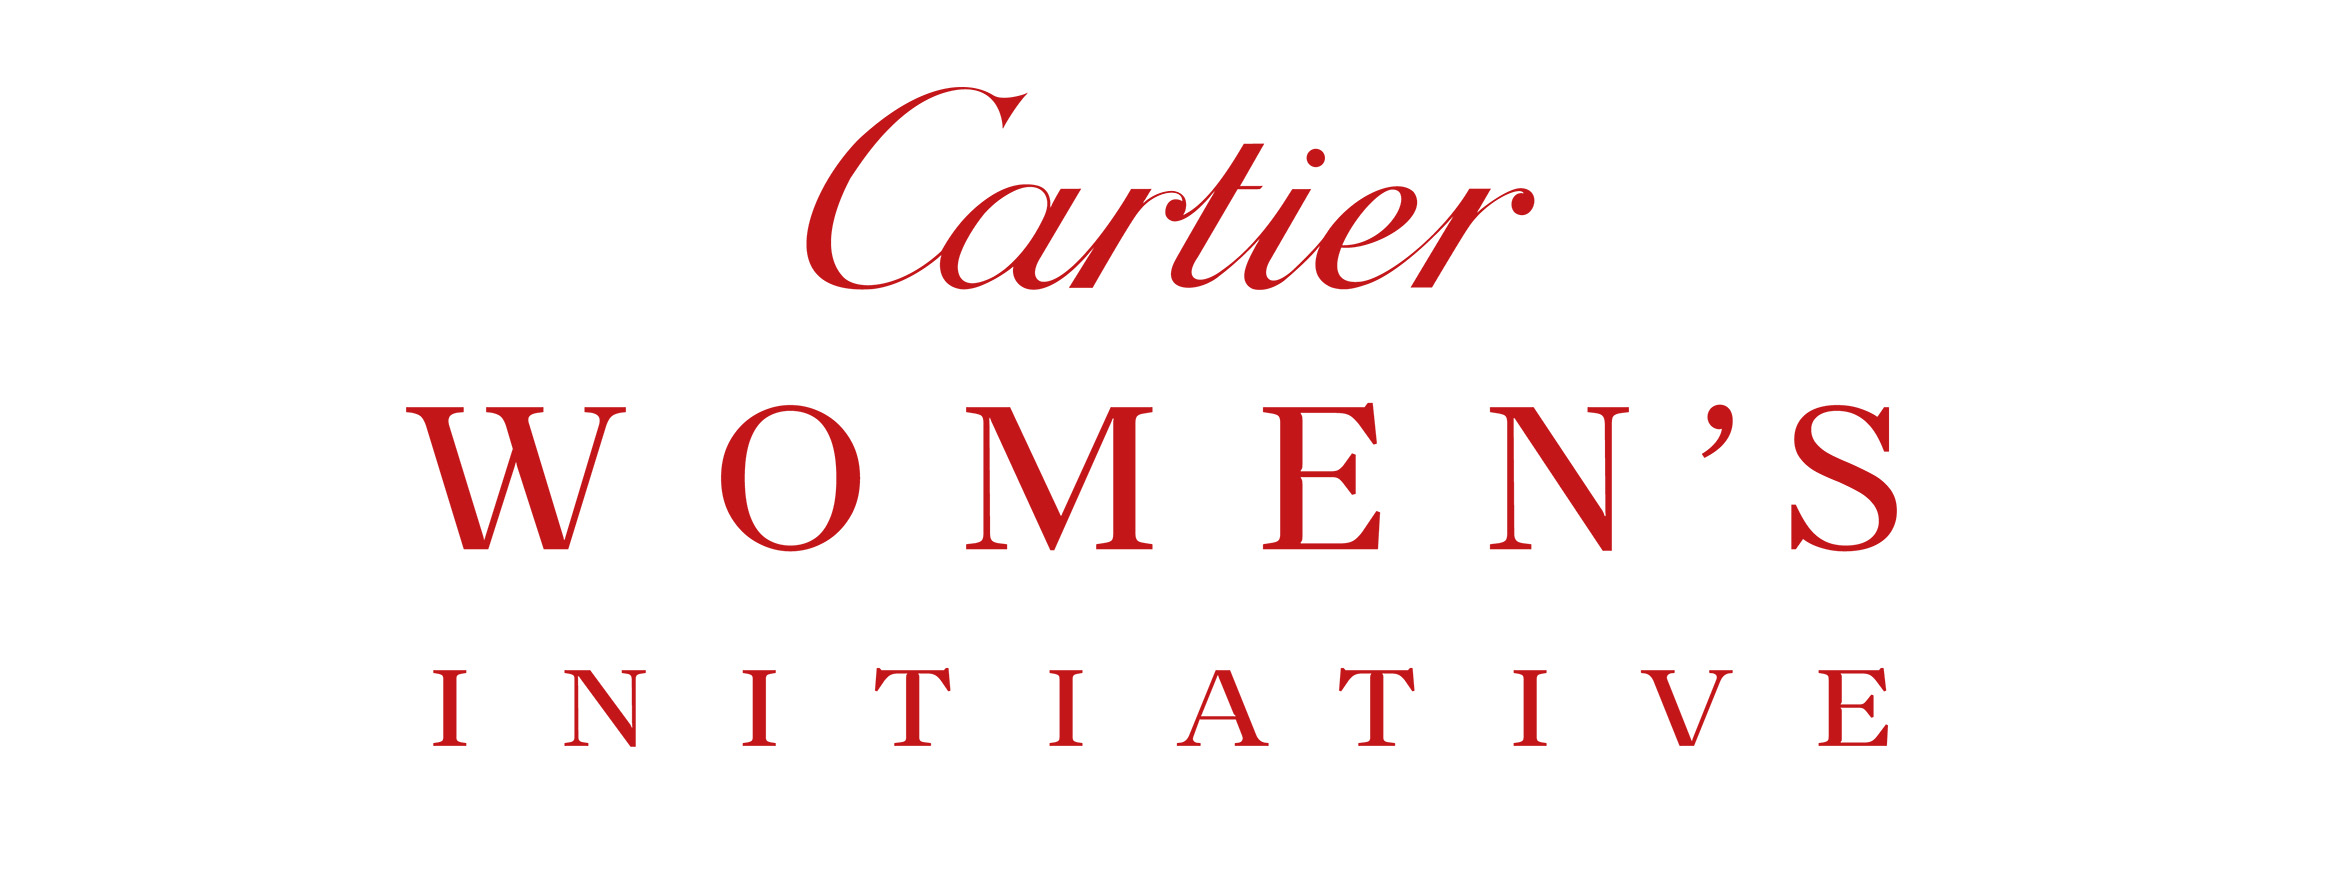 Calling for Applicants: Cartier Women’s Initiative